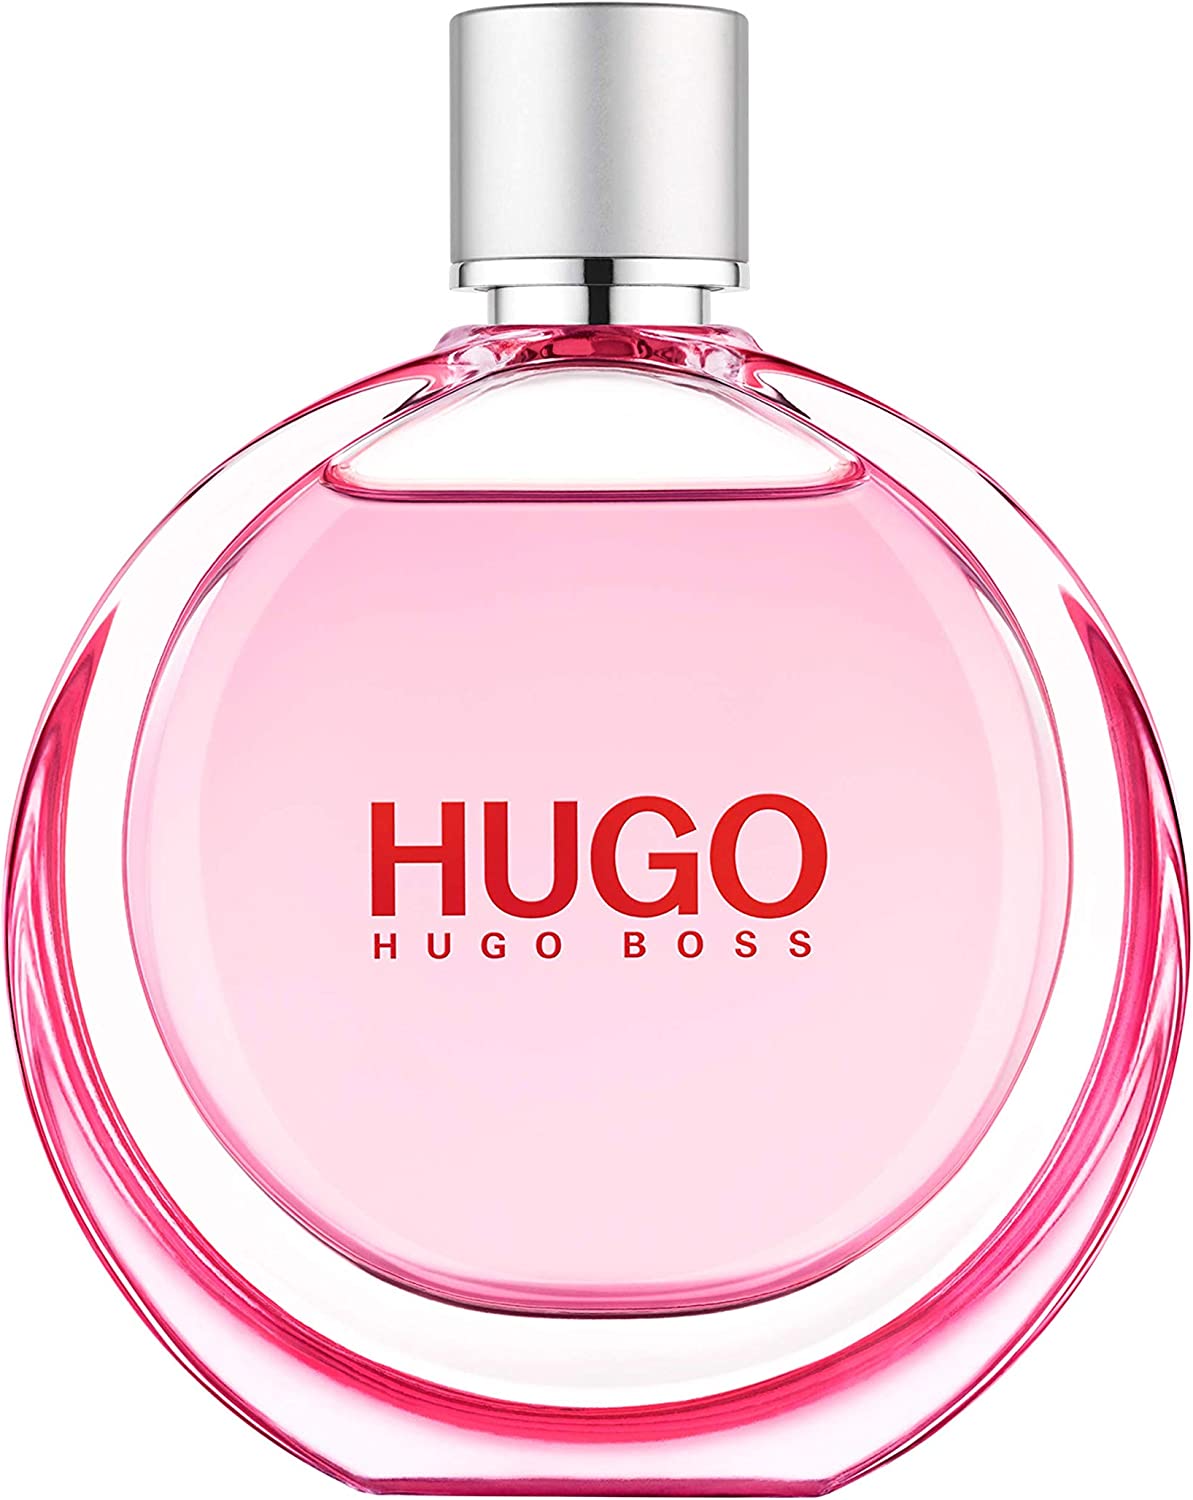 Hugo Boss Woman Extreme Perfume 75 ml